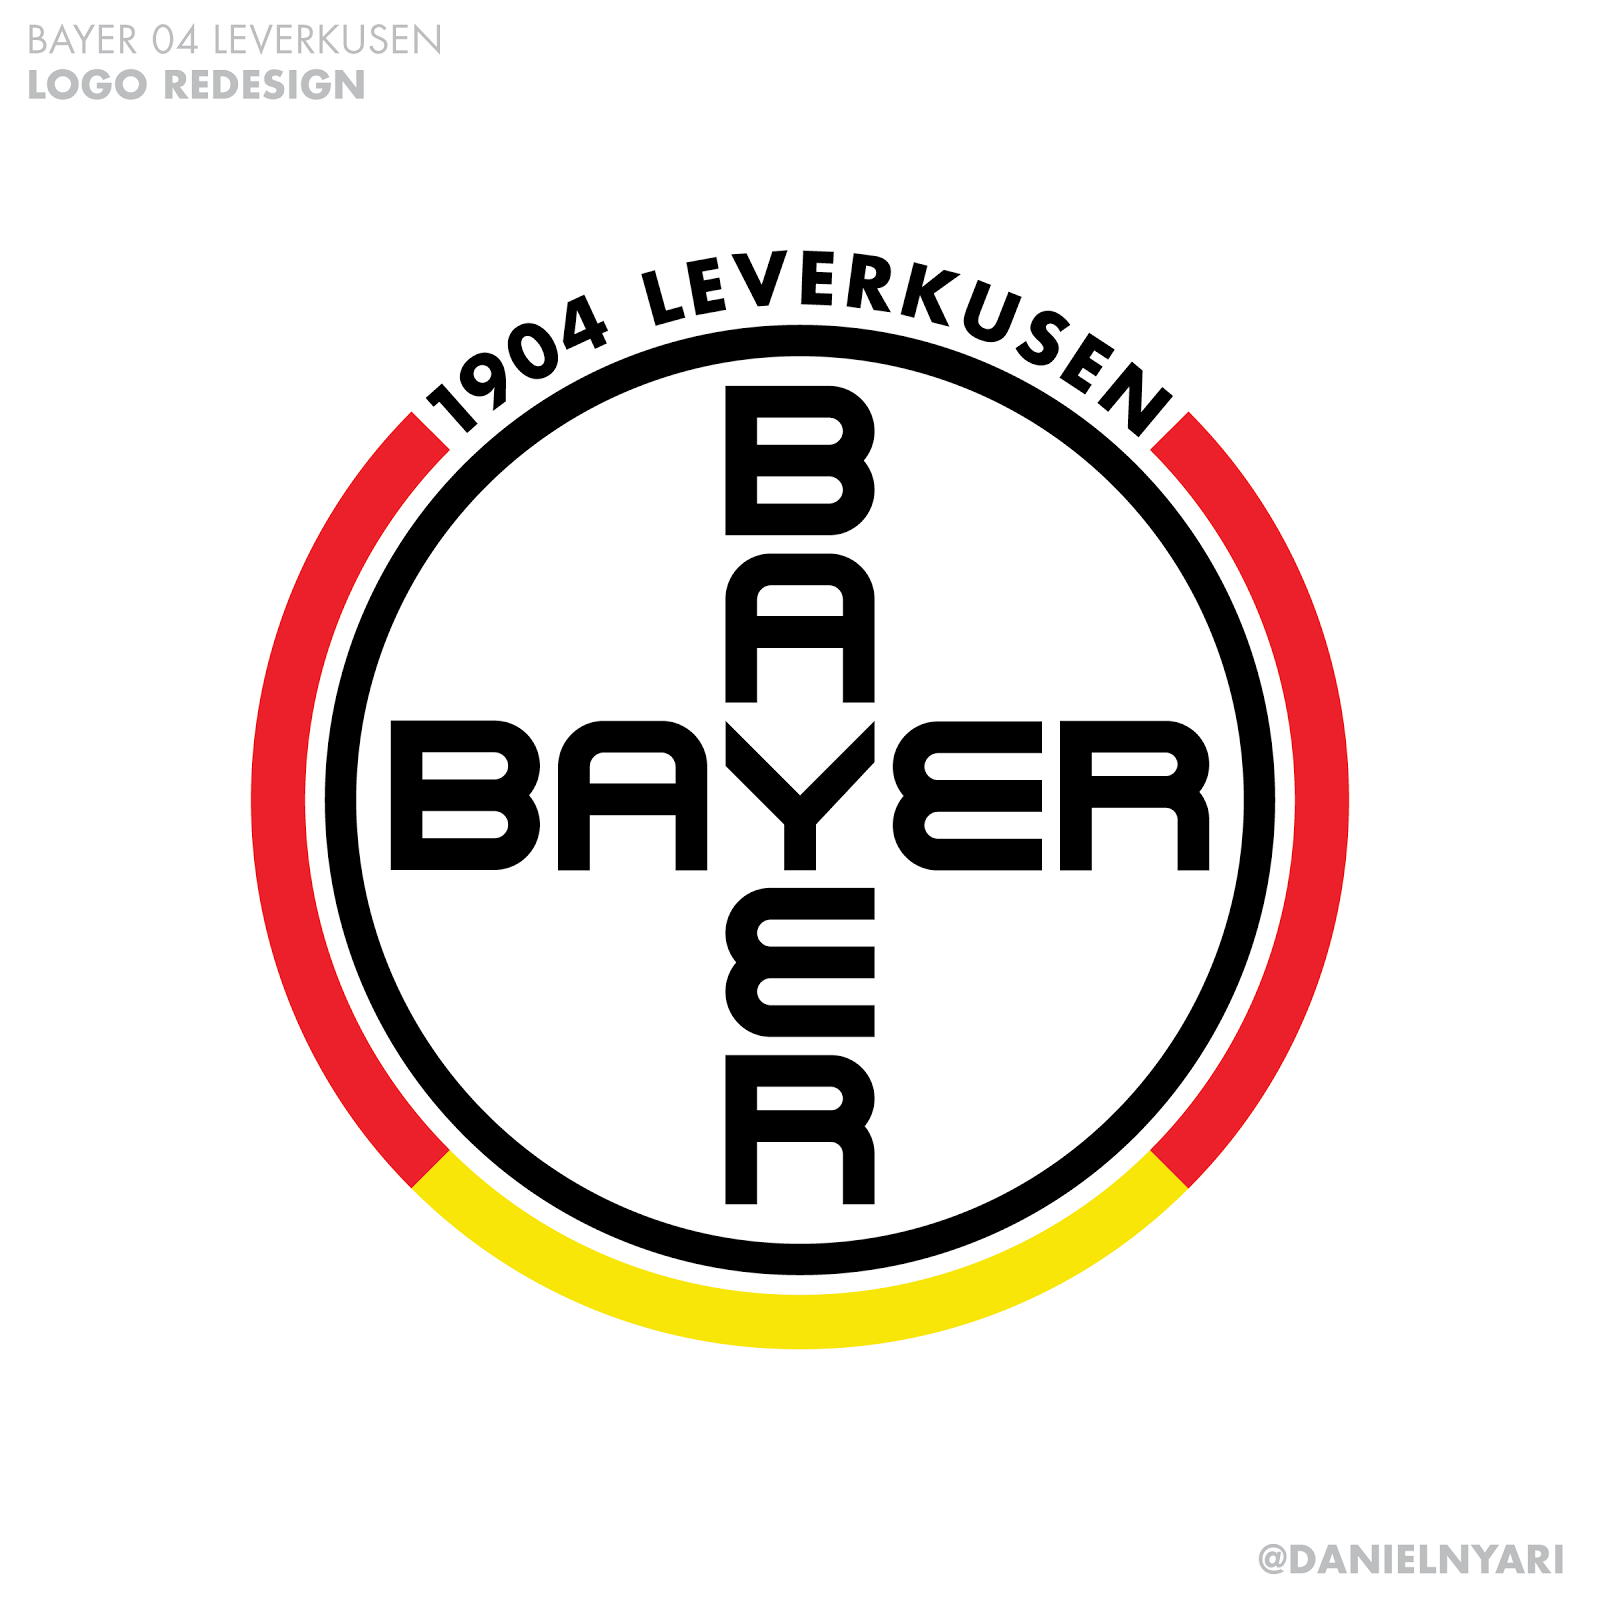 Leverkusen Logo - Bayer #Leverkusen Logo. Redesign By Daniel Nyari. The Pitch. All